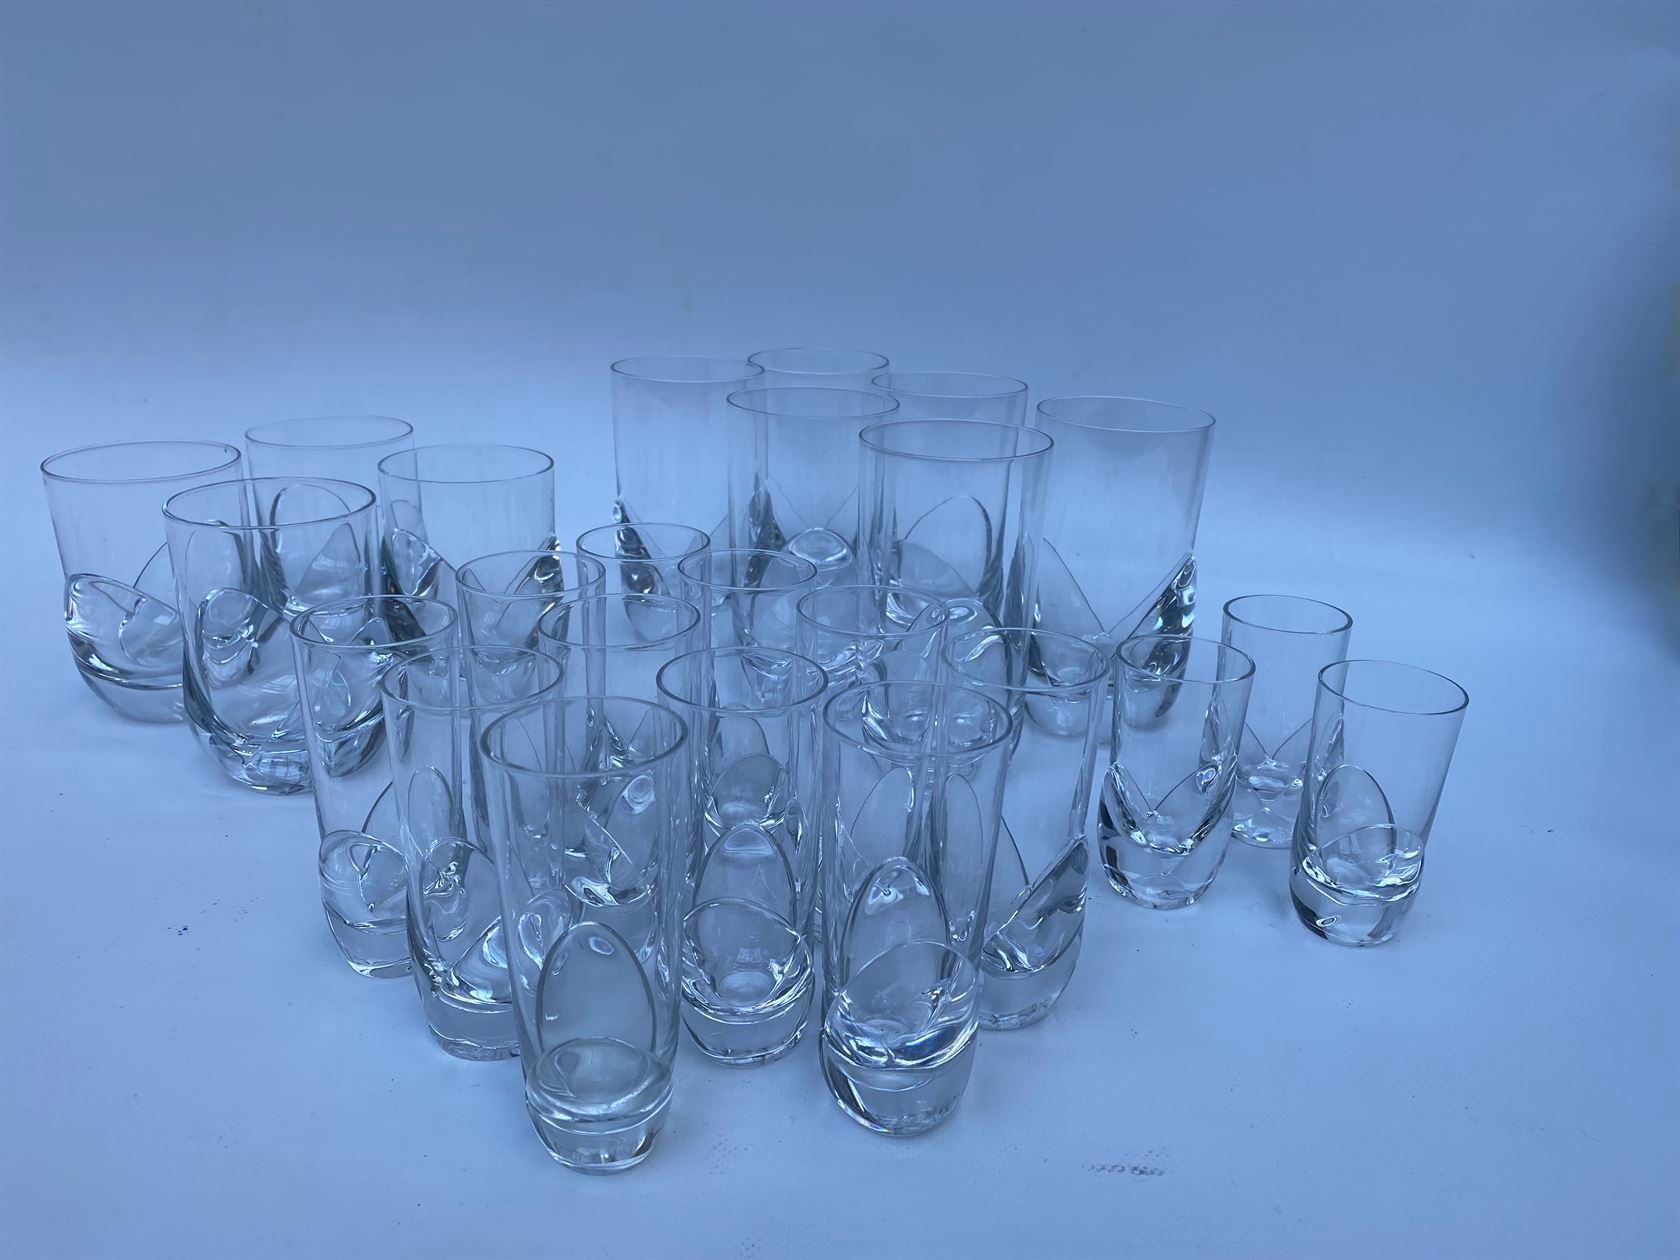 Null DAUM : 罕见的水晶服务套装，包括六个水杯（13.6厘米高），四个直杯（10.8厘米高），十一个酒杯（10.8厘米高）和三个小杯（8.5厘米高），&hellip;